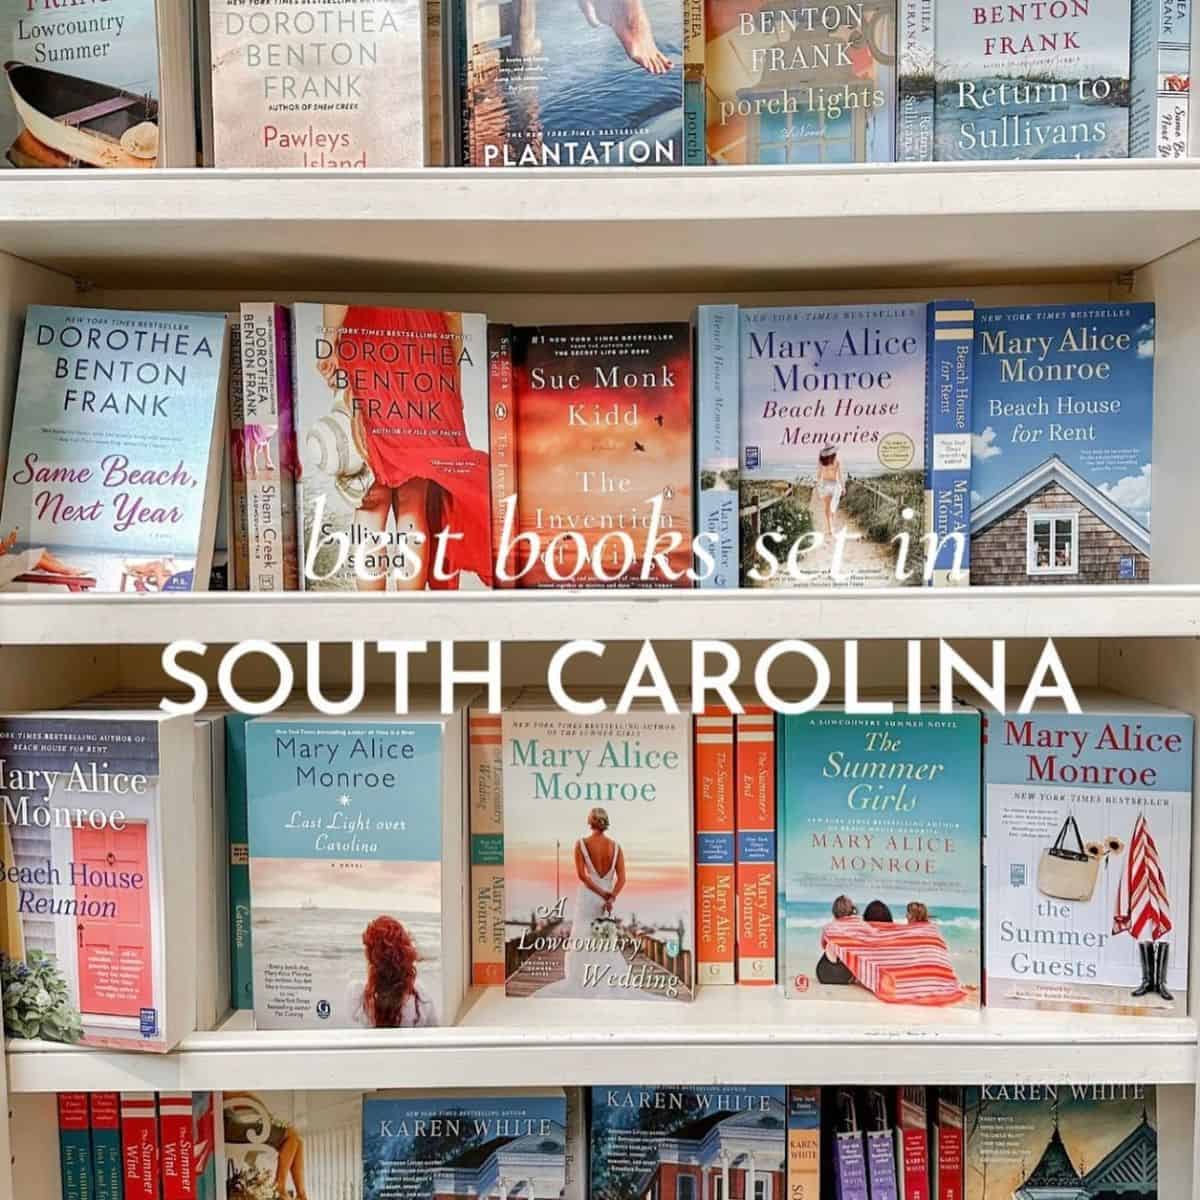 South Carolinan books on a Charleston bookshelf.